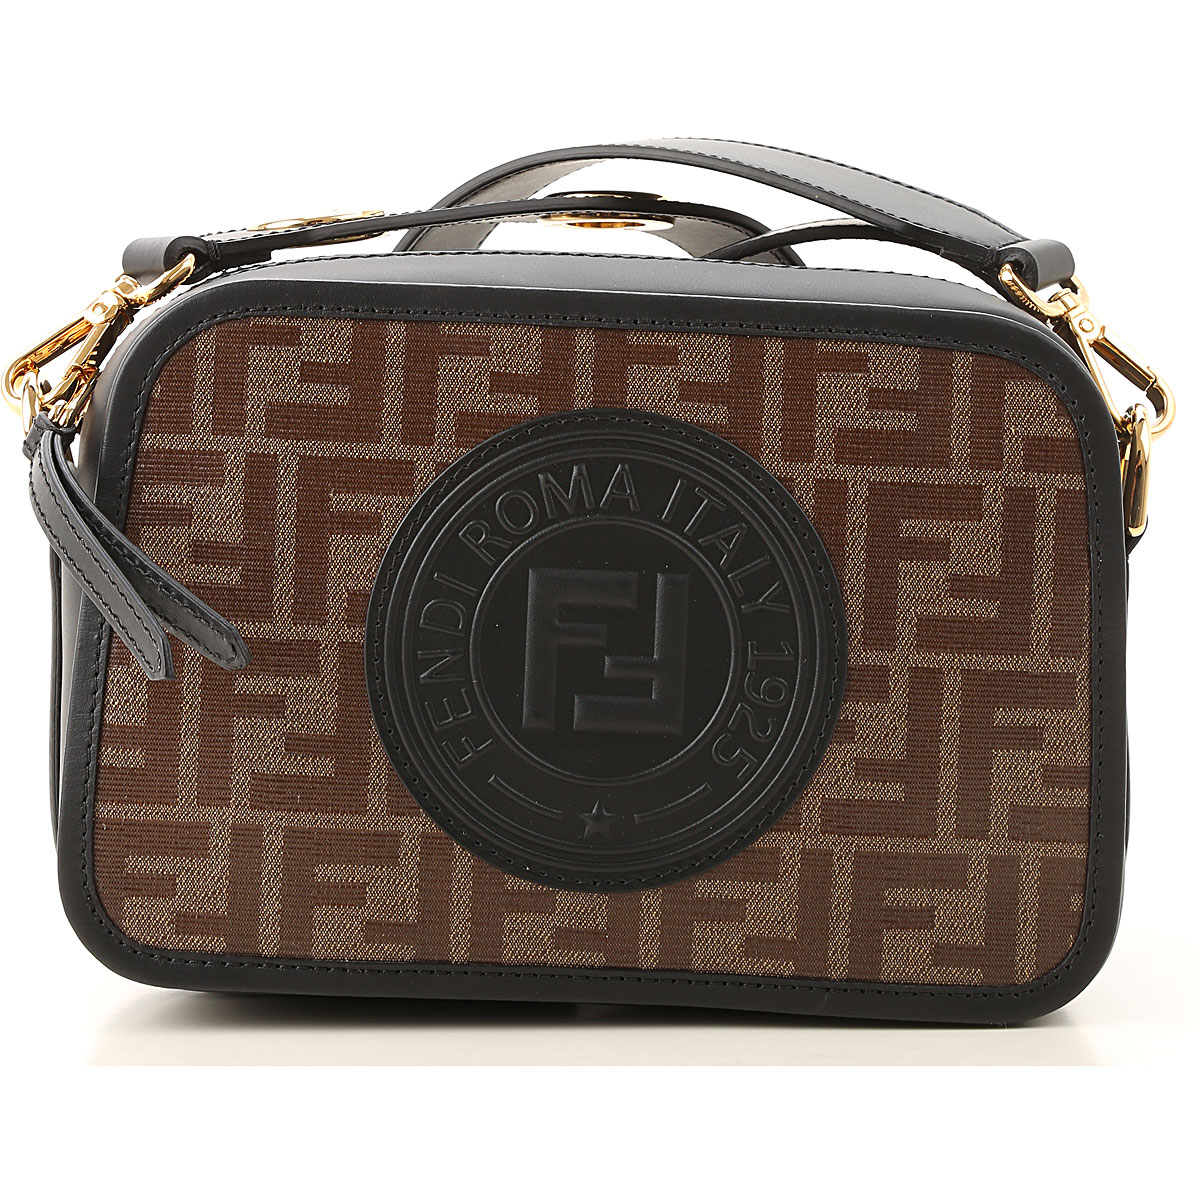 Handbags Fendi, Style code: 8bt287-a5k4 